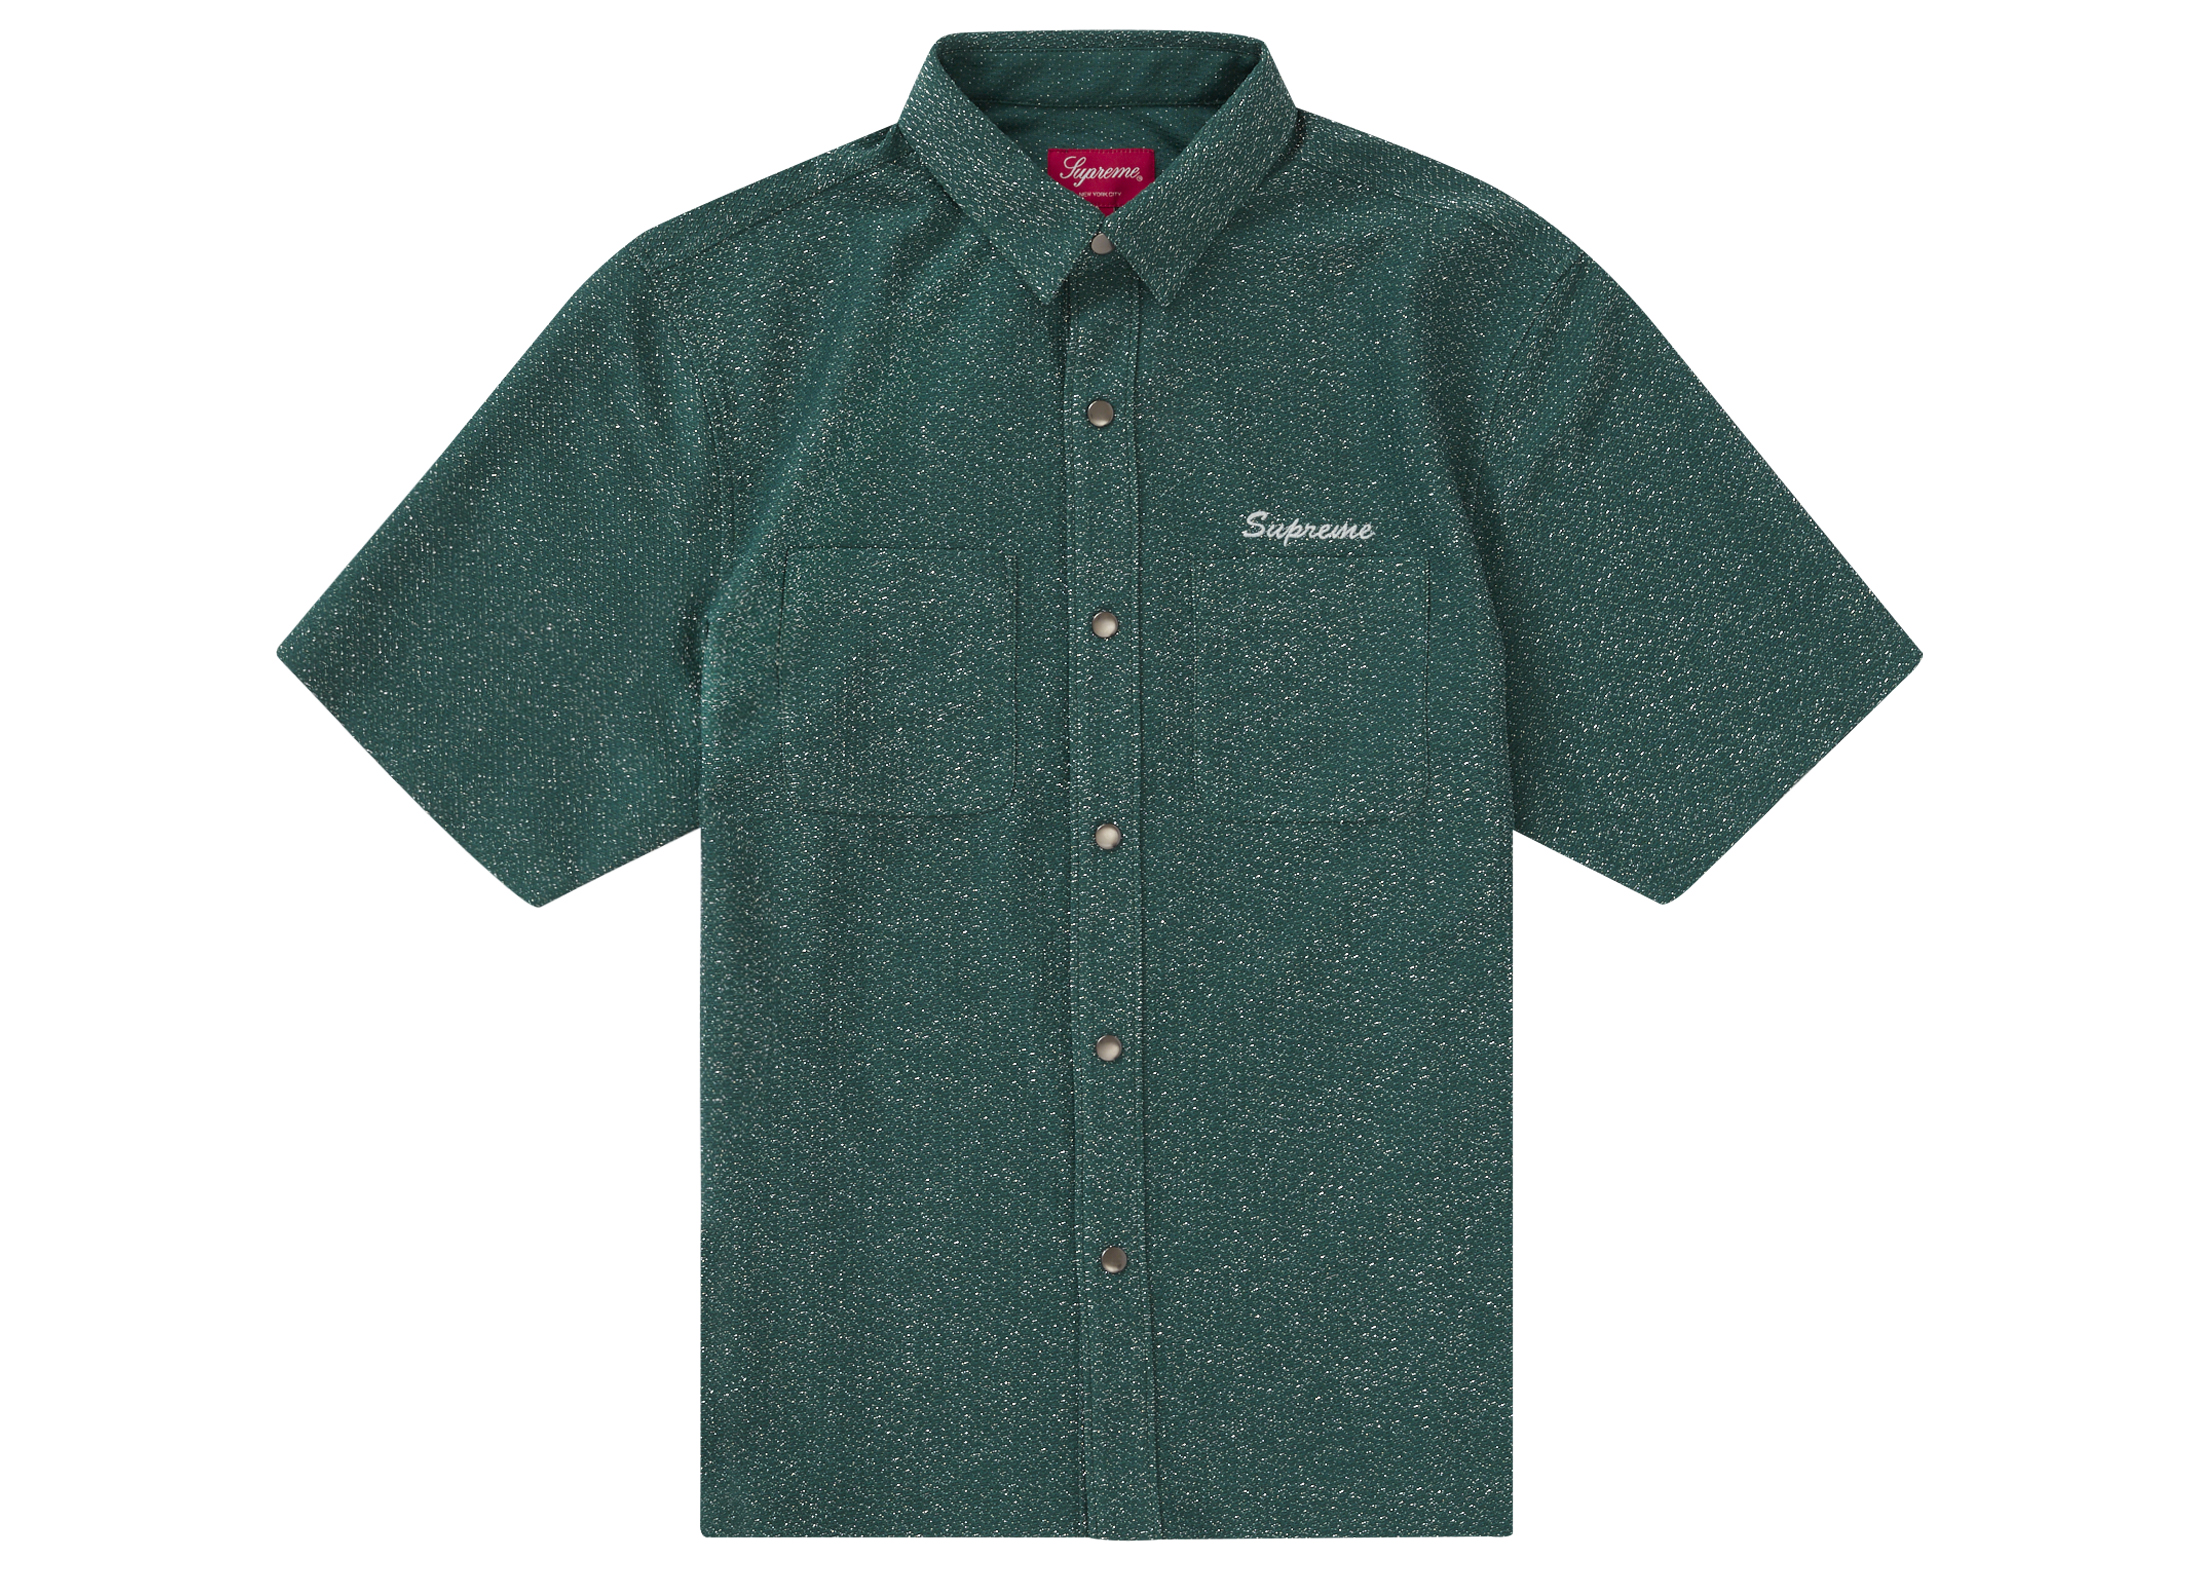 supremeSupreme 22fw Lurex S/S Shirt sサイズ Green - spacioideal.com